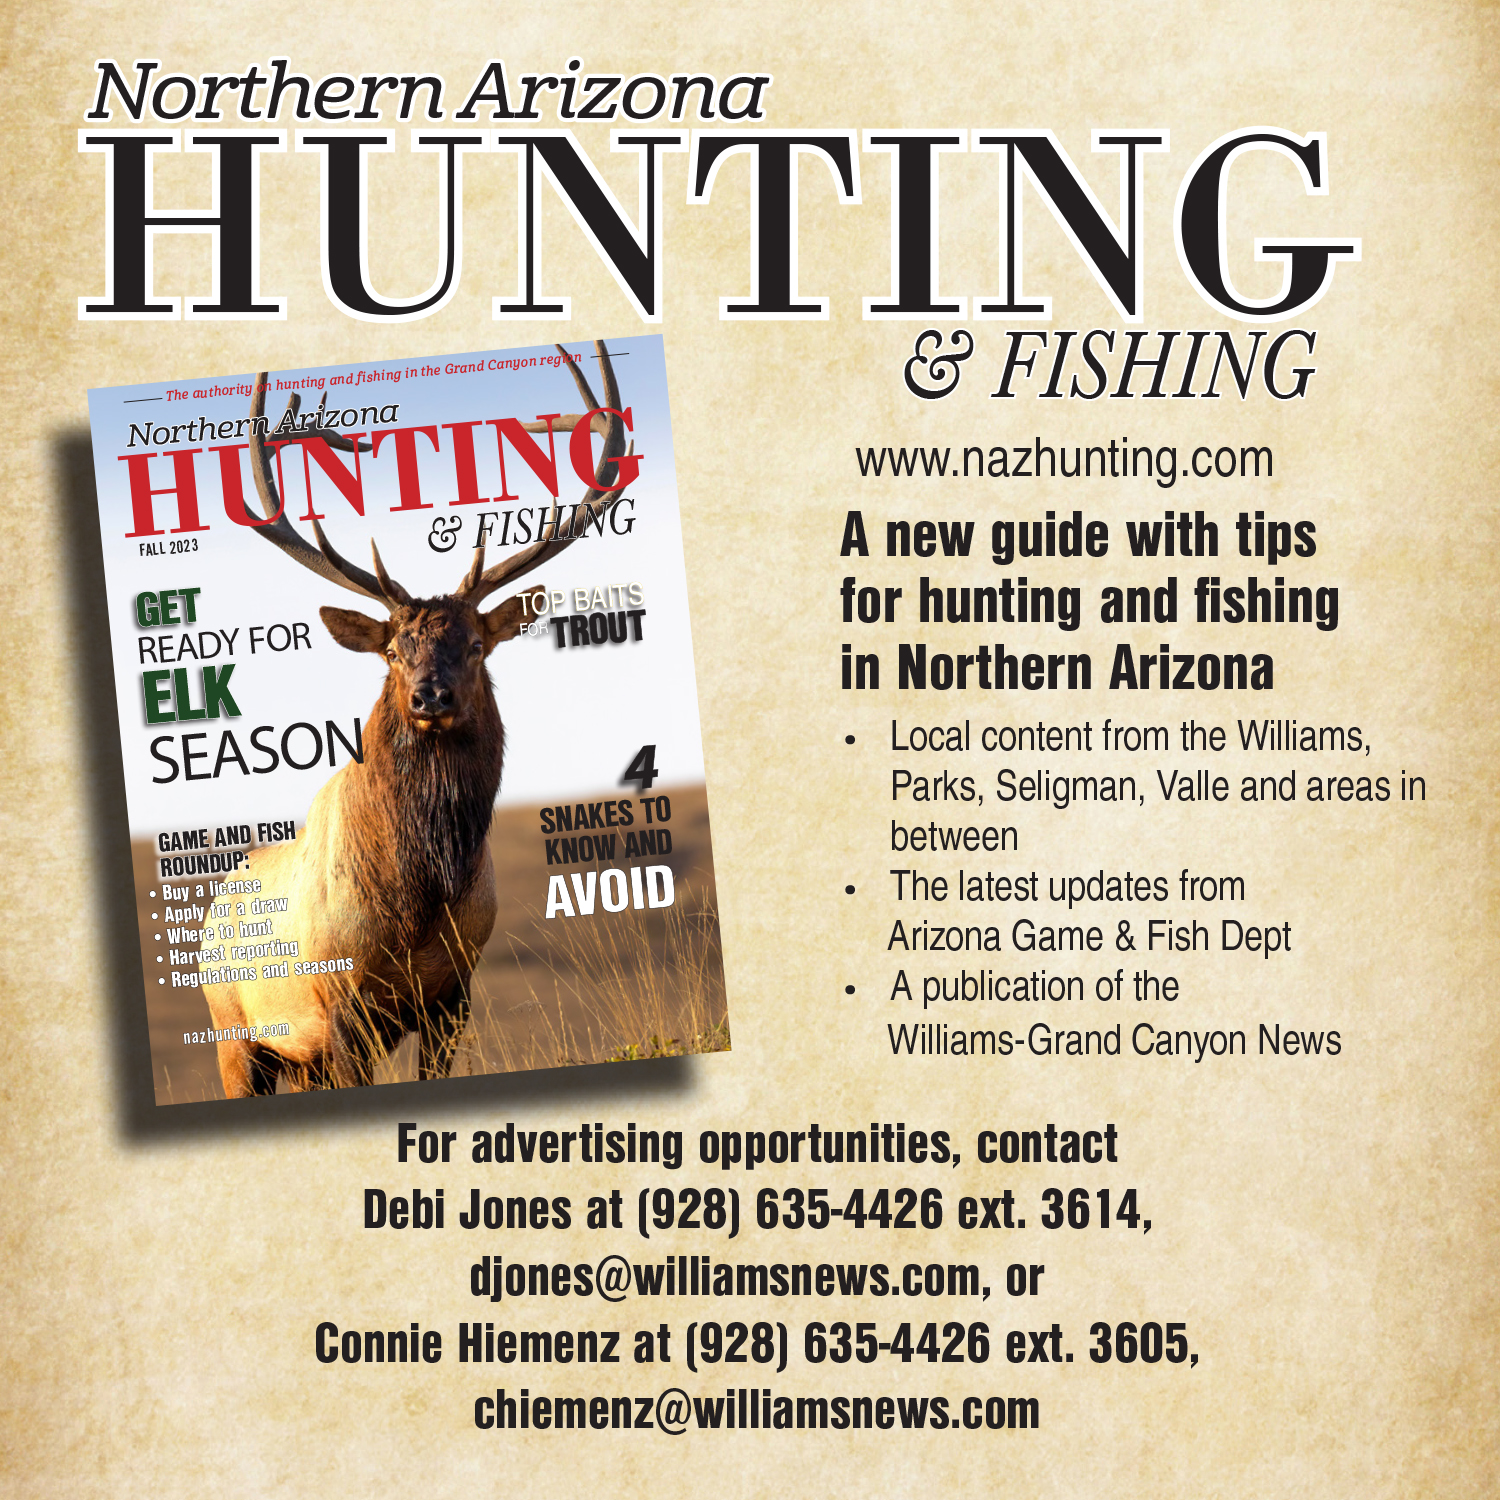 Northern Arizona Hunting & Fishing magazine premier edition out